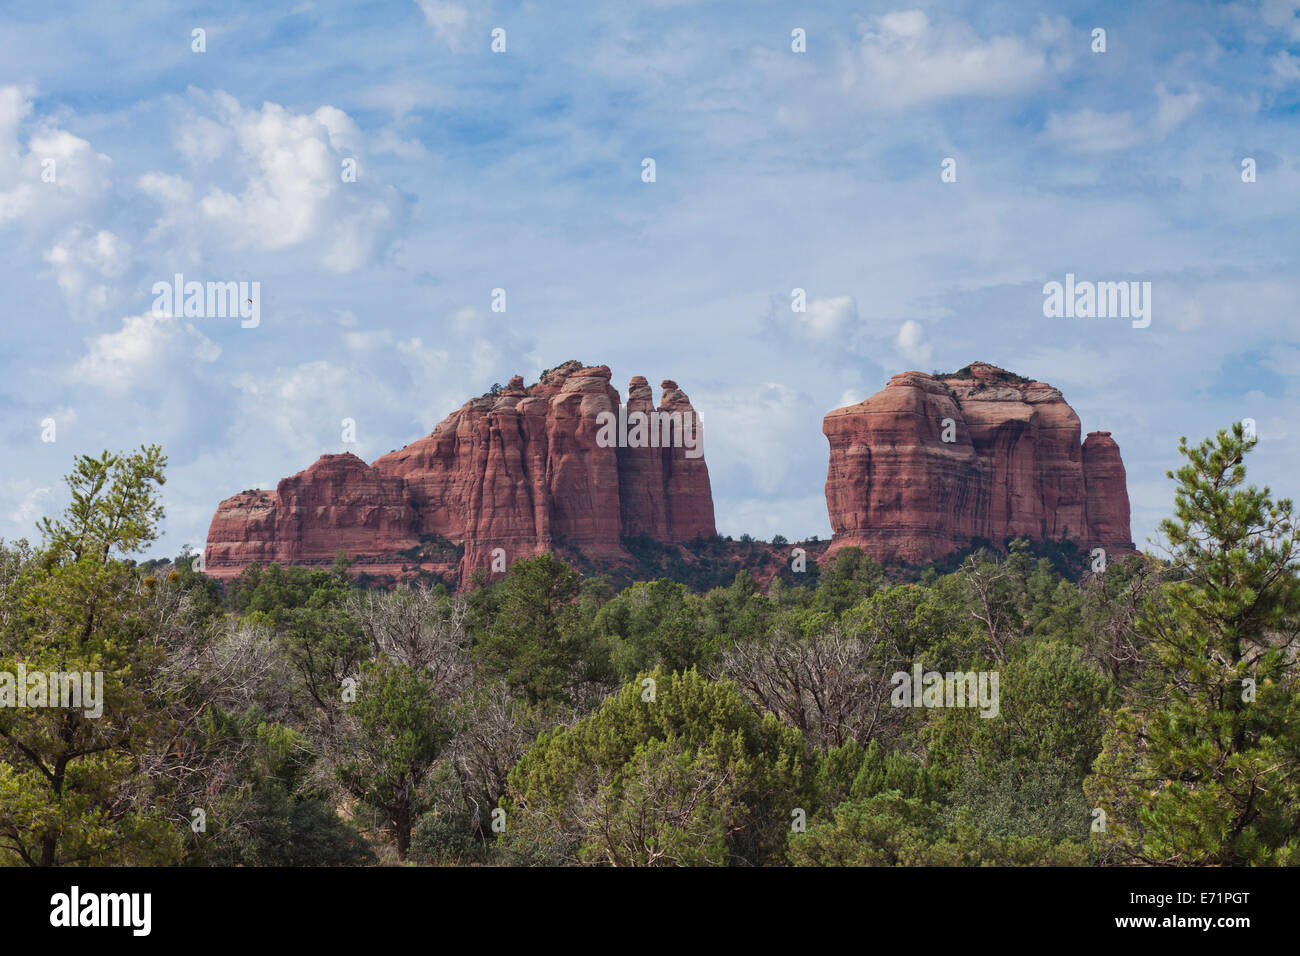 Eroded sandstone formation - Sedona, Arizona USA Stock Photo